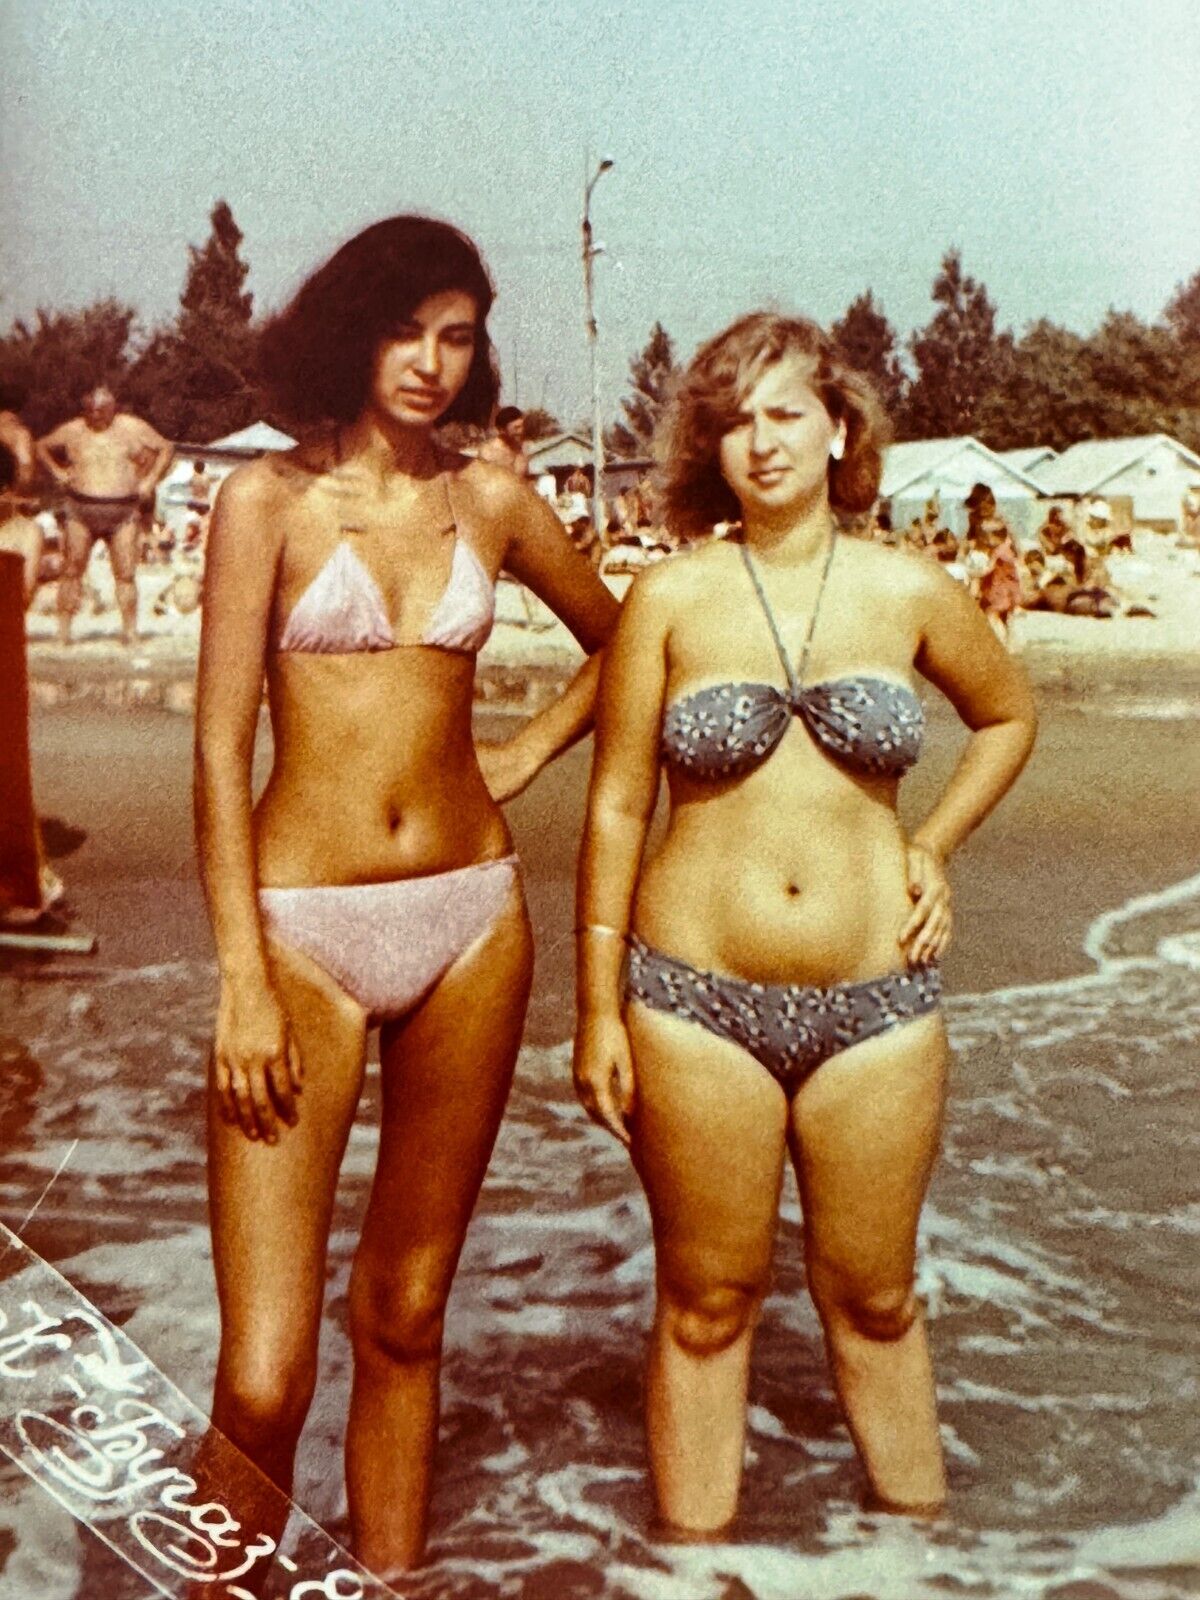 1985 Young Slender and Curvy Pretty Women Bikini Beach Vintage Photo Snapshot